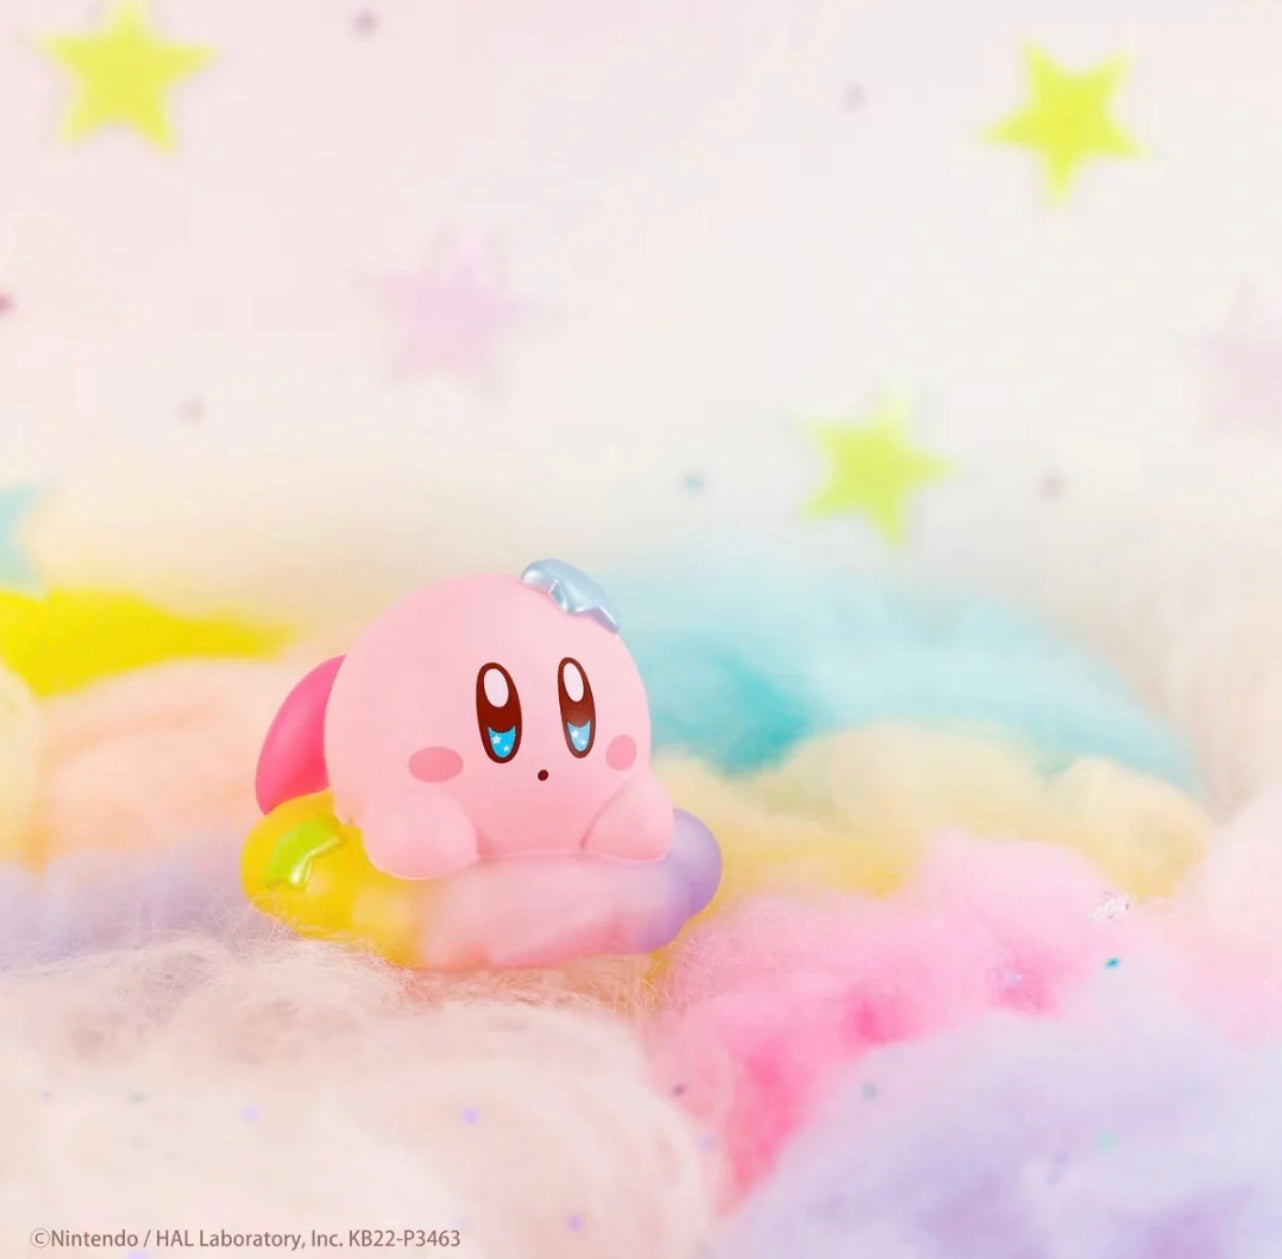 [BANDAI NAMCO] Kirby -  Kirby's Friends Series 2 Blind Box